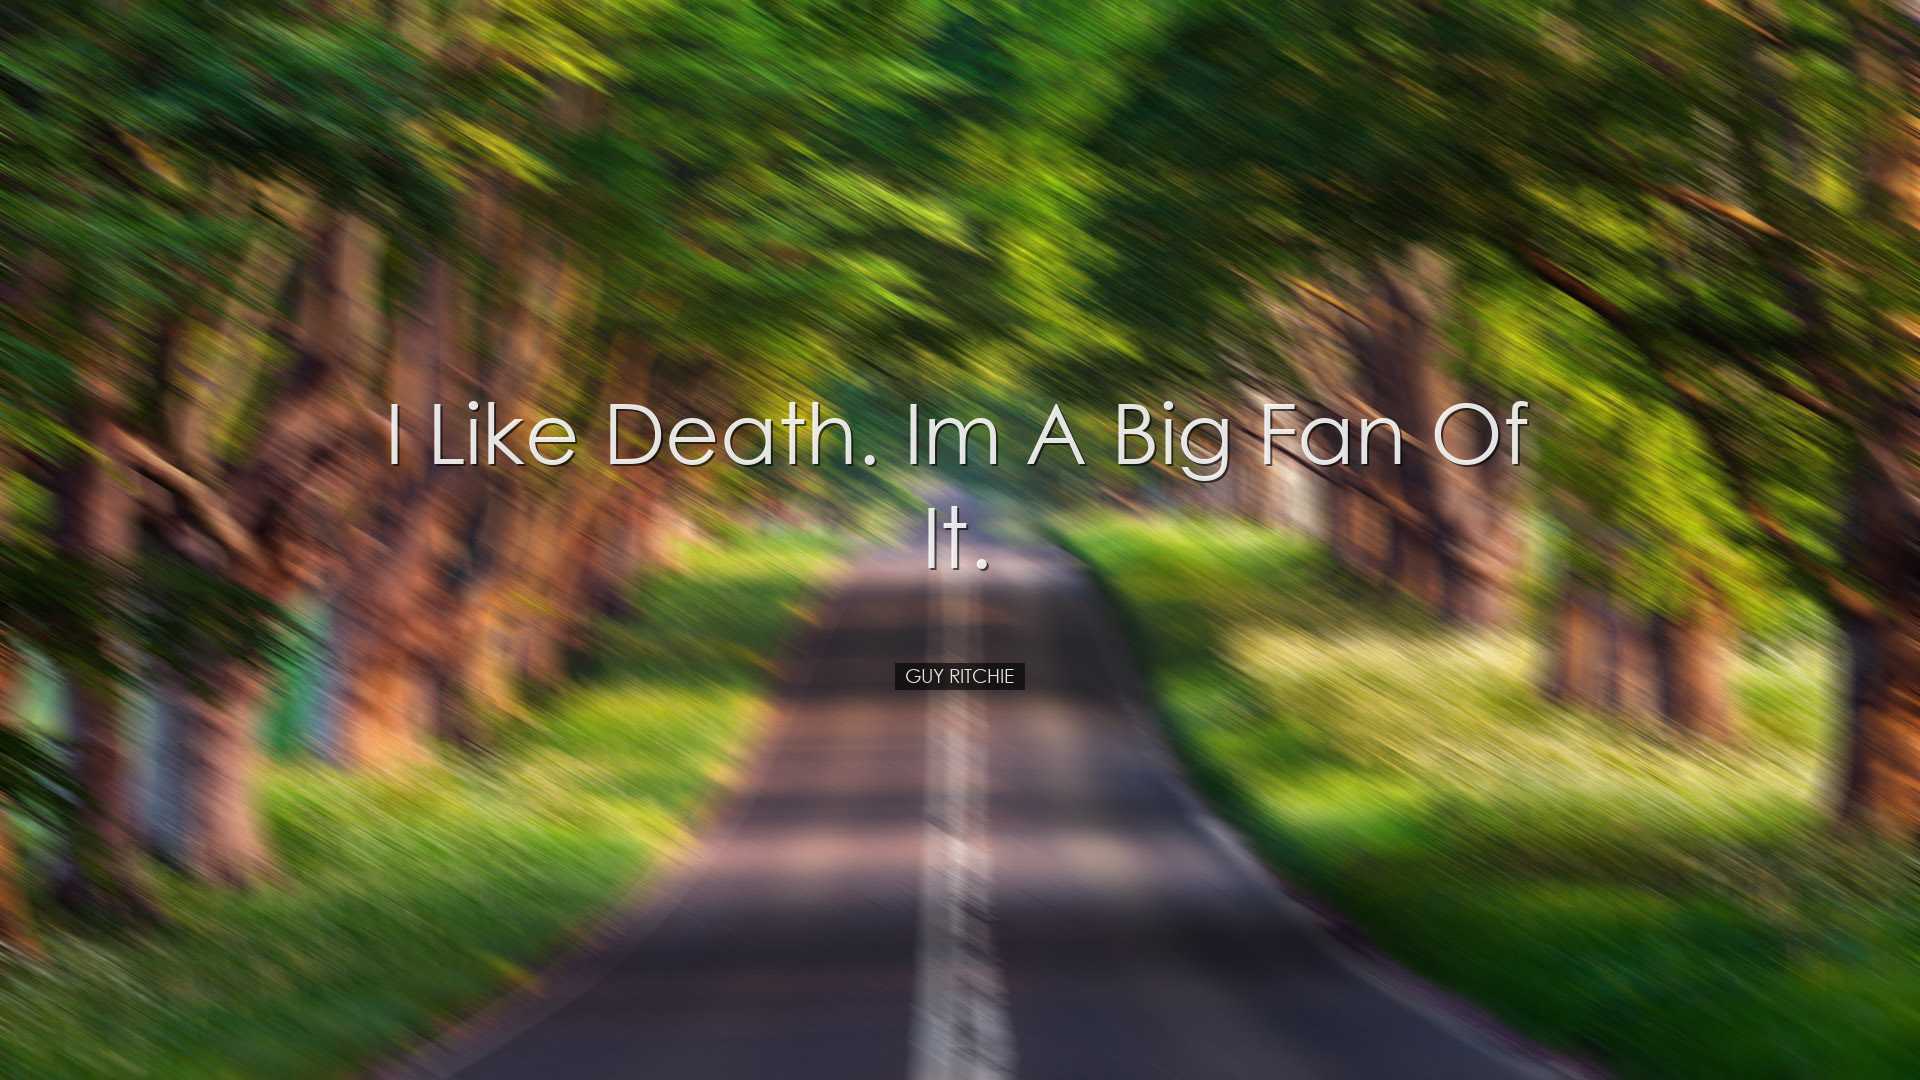 I like death. Im a big fan of it. - Guy Ritchie